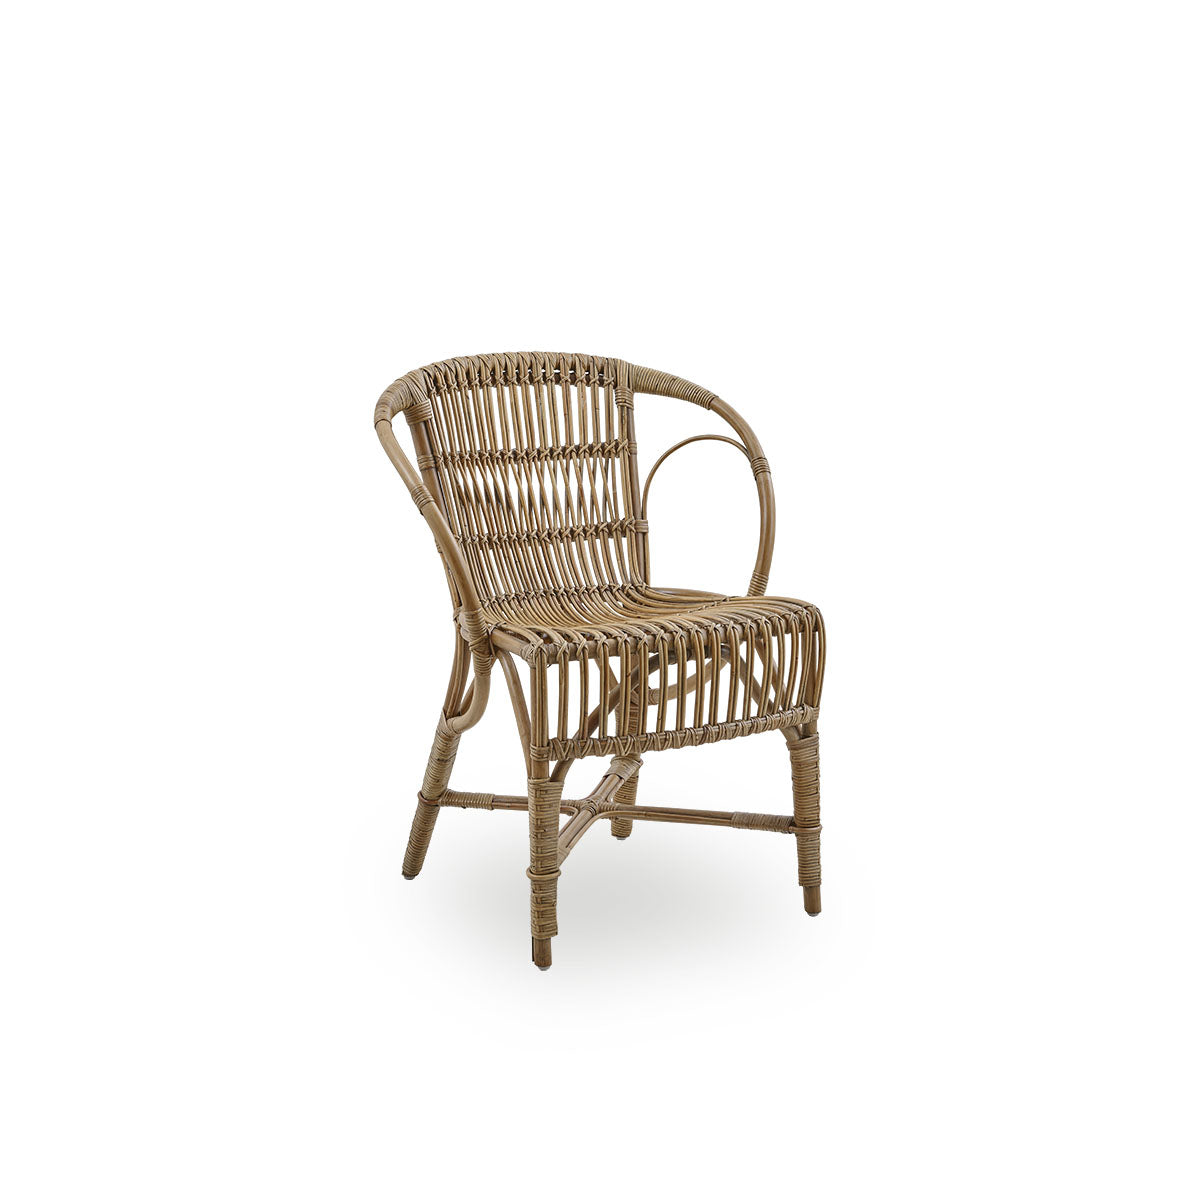 Rattan wicker chair | Robert W. | Robert Dining Chair - Sika 